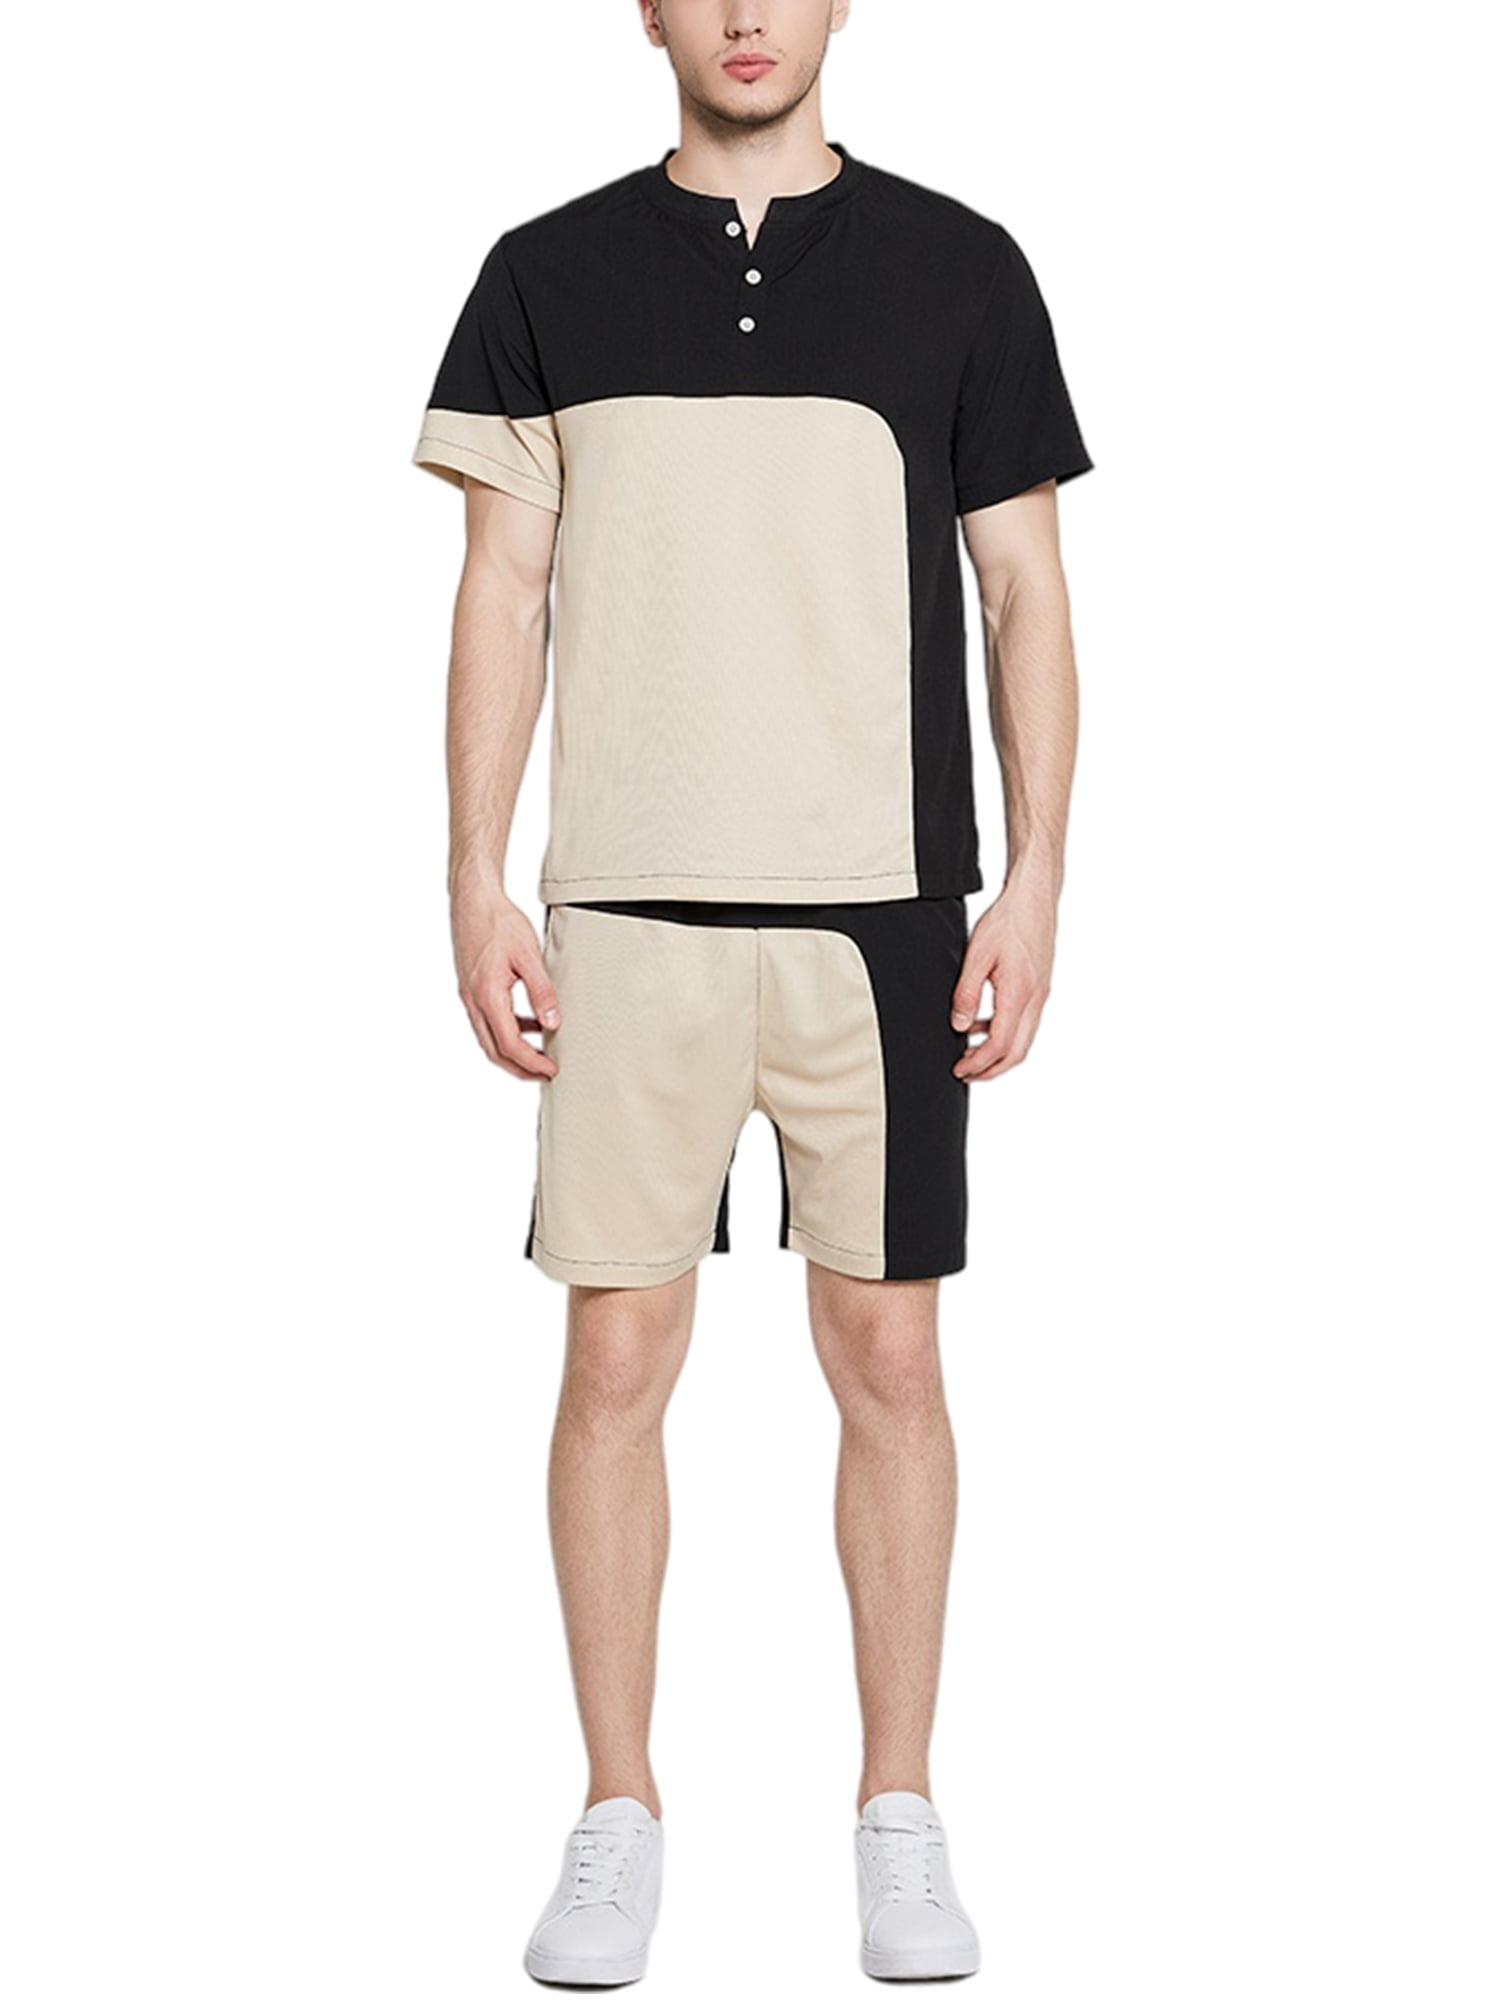 Mens Tracksuit Set Short Sleeve T-Shirt Shorts Sweatshirt Jogging Suit Sportwear 